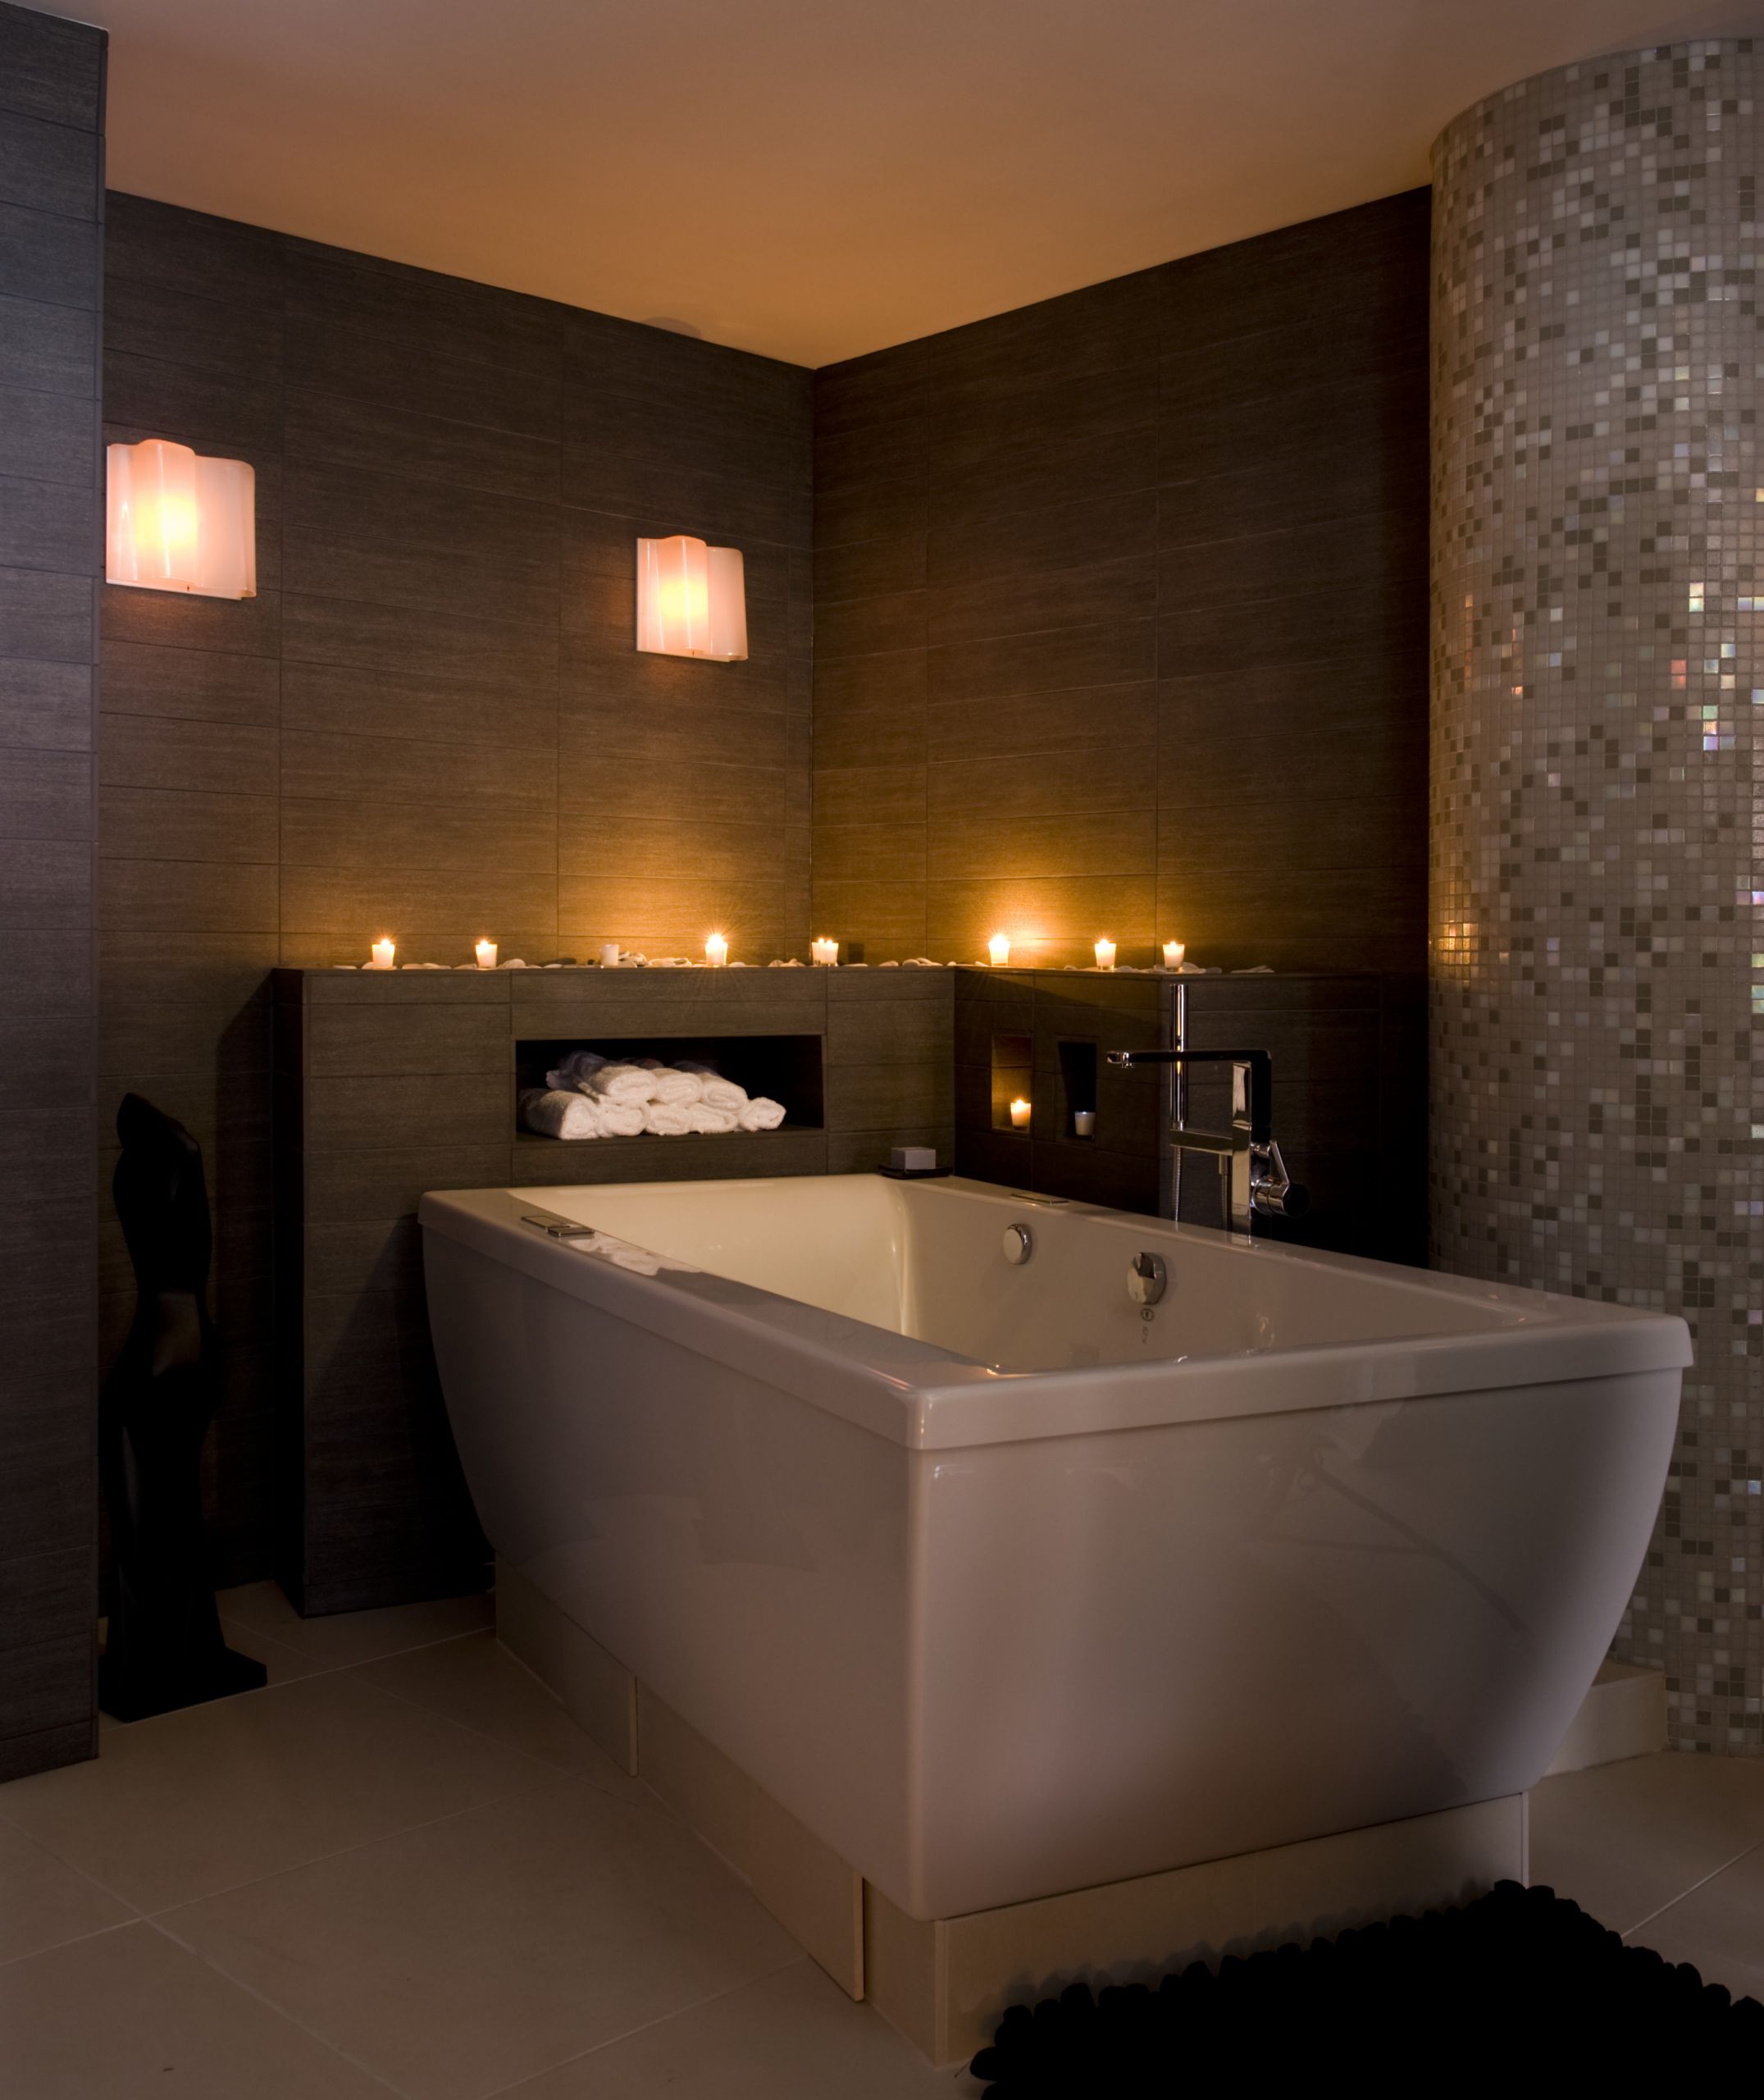 Spa Master Bathroom
 “Spa” Master Bath – Veseli Design Build Inc